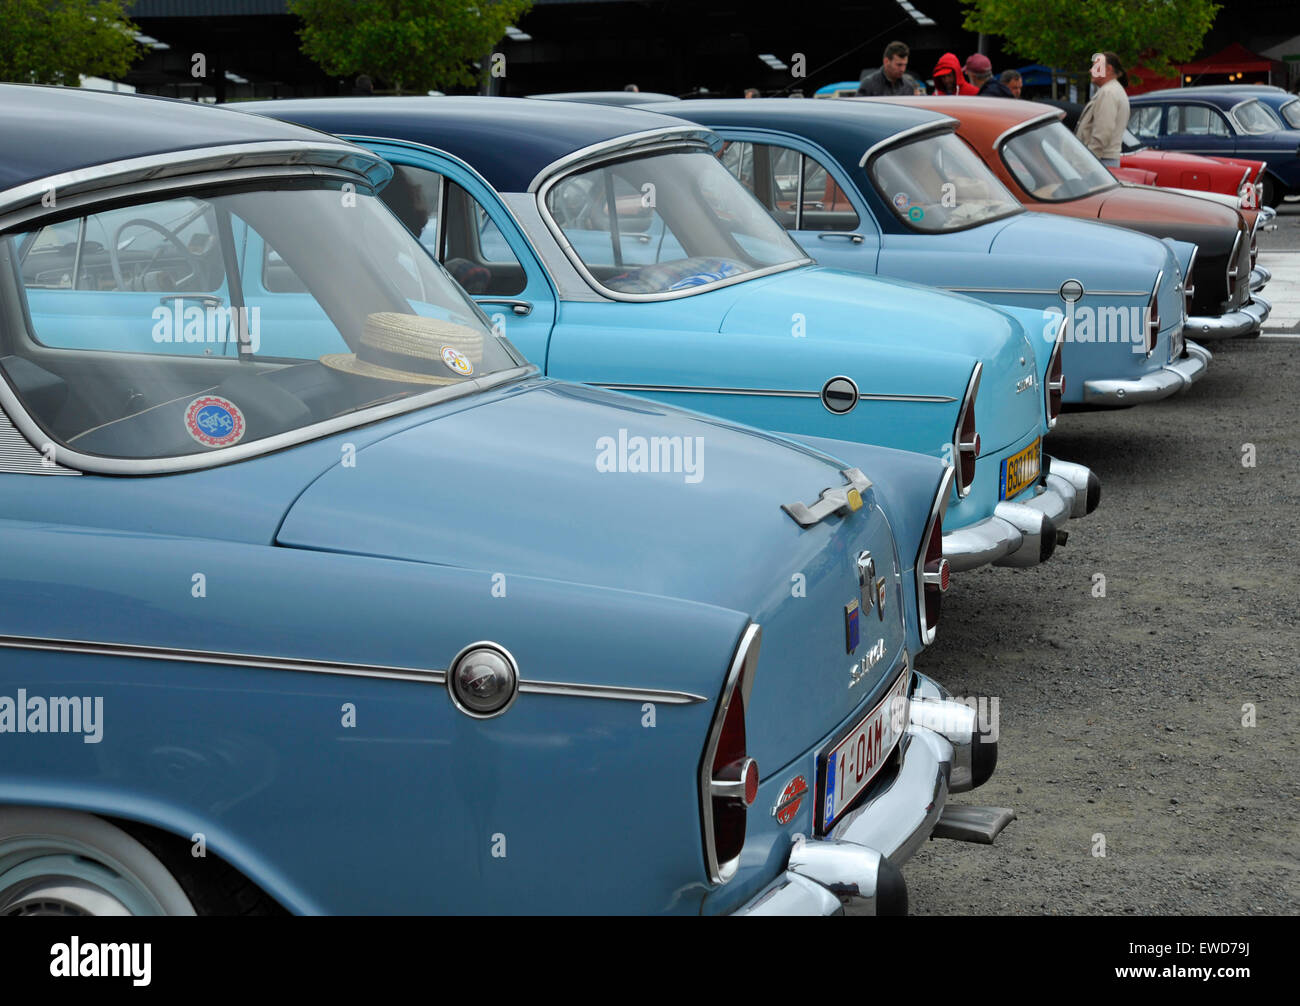 Klassische französische Simca Limousine Auto lineup Stockfotografie - Alamy